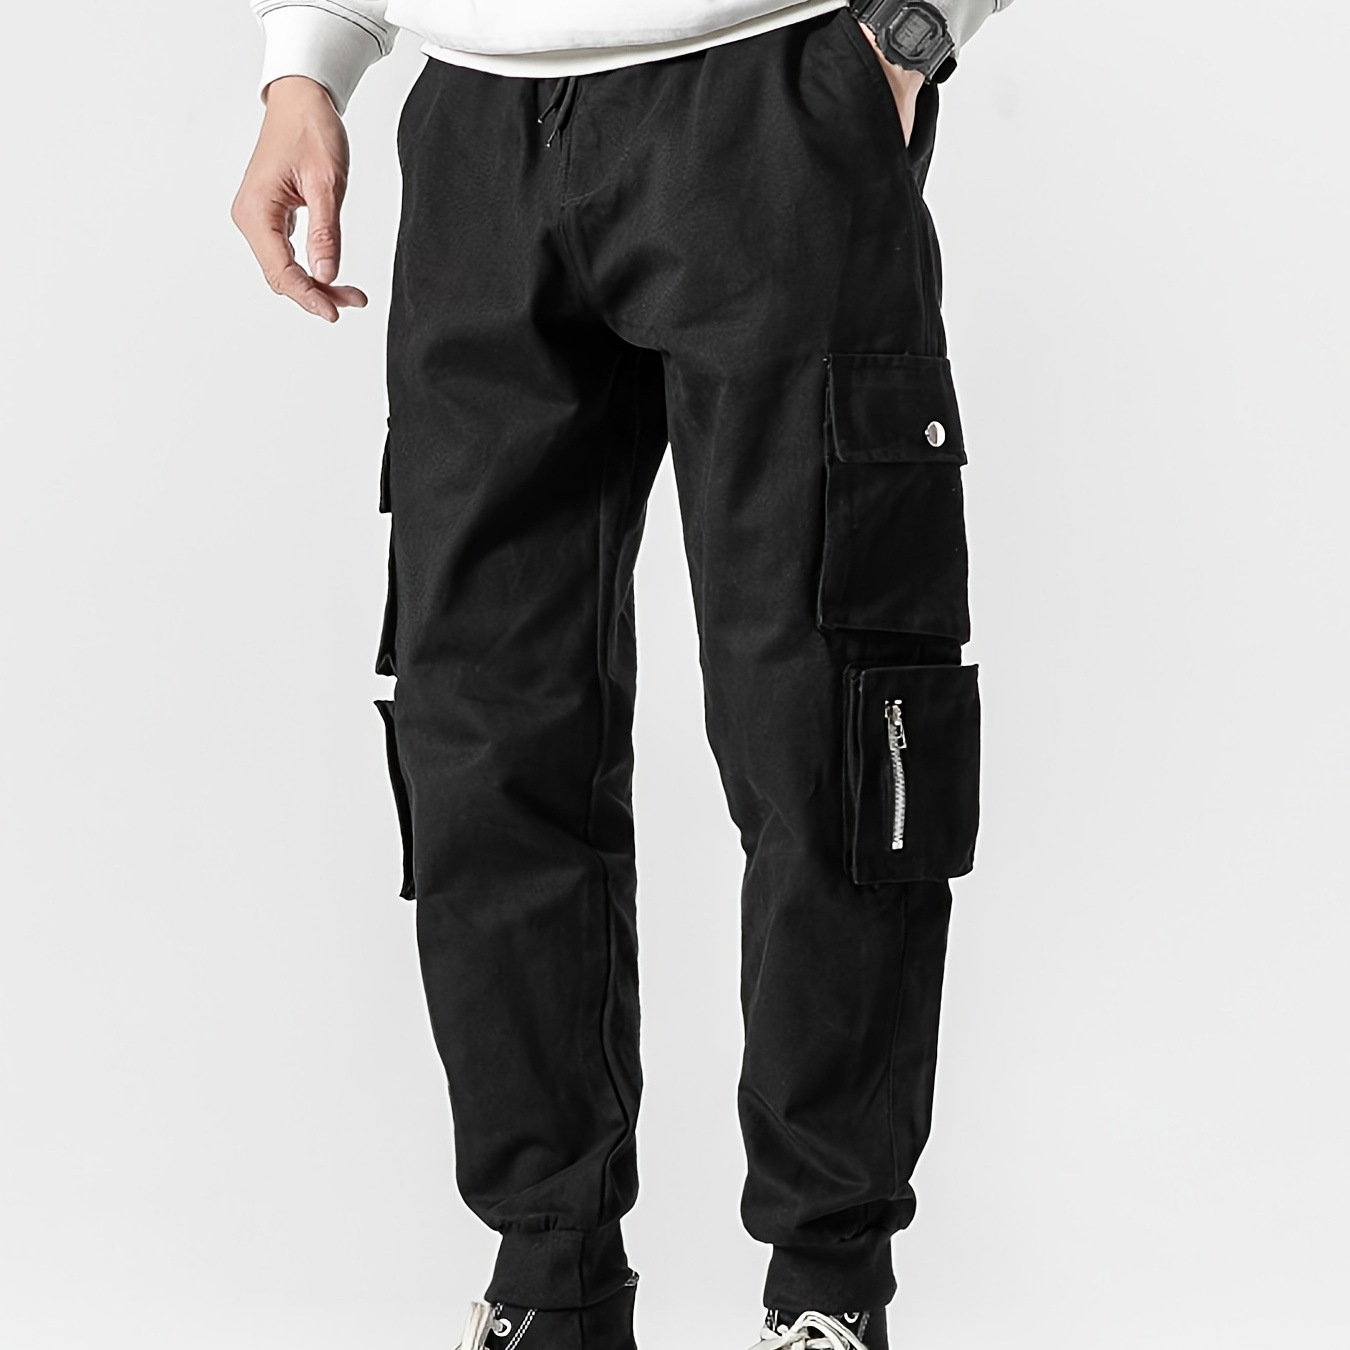 Men's Black Cargo Pants Casual Stylish Cotton Jogger Pants With Flap ...